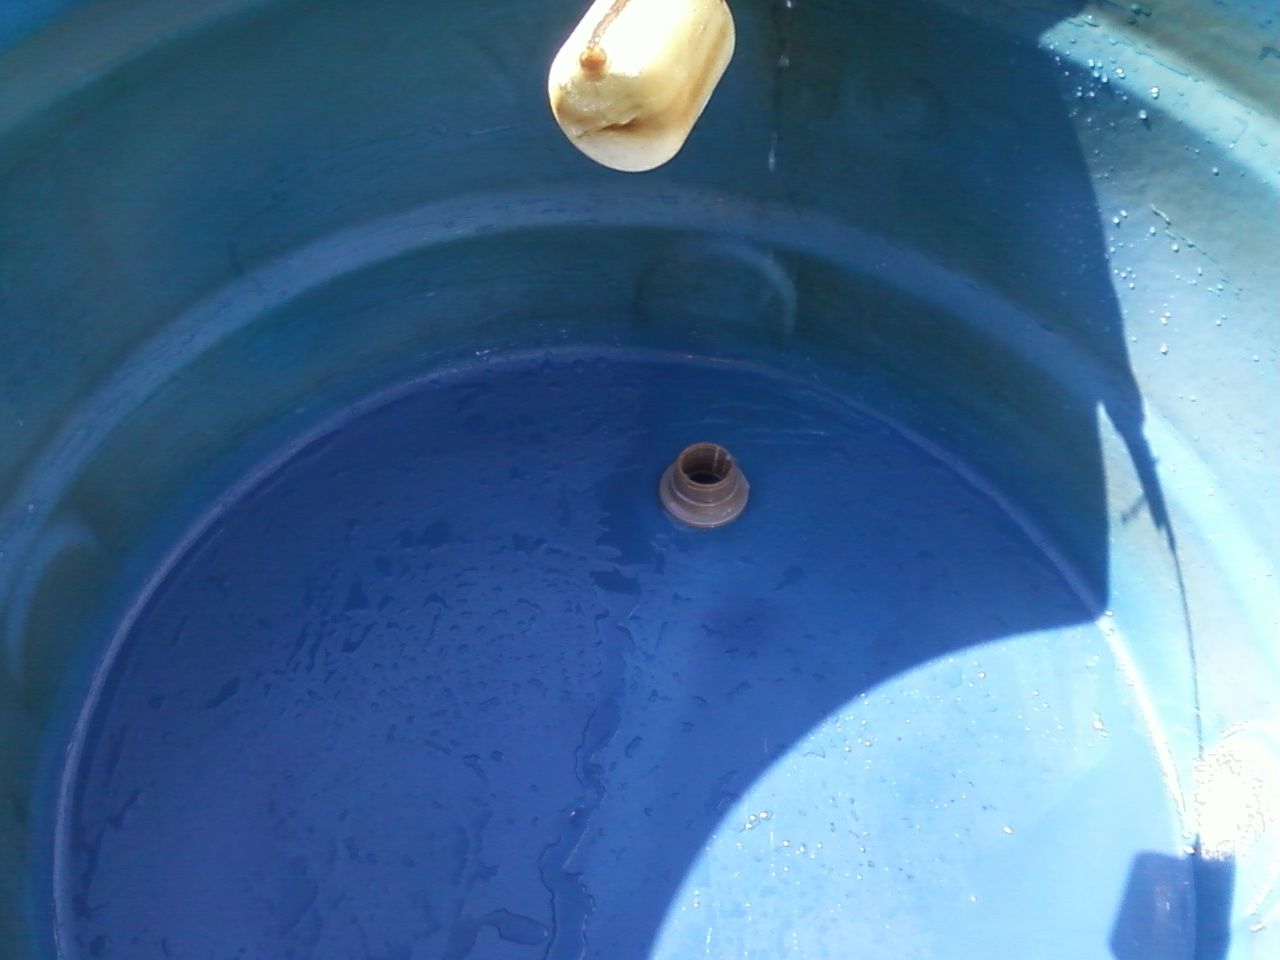 Reparo de Caixa de água Preço Jardim Iguatemi - Reparo de Caixa de água